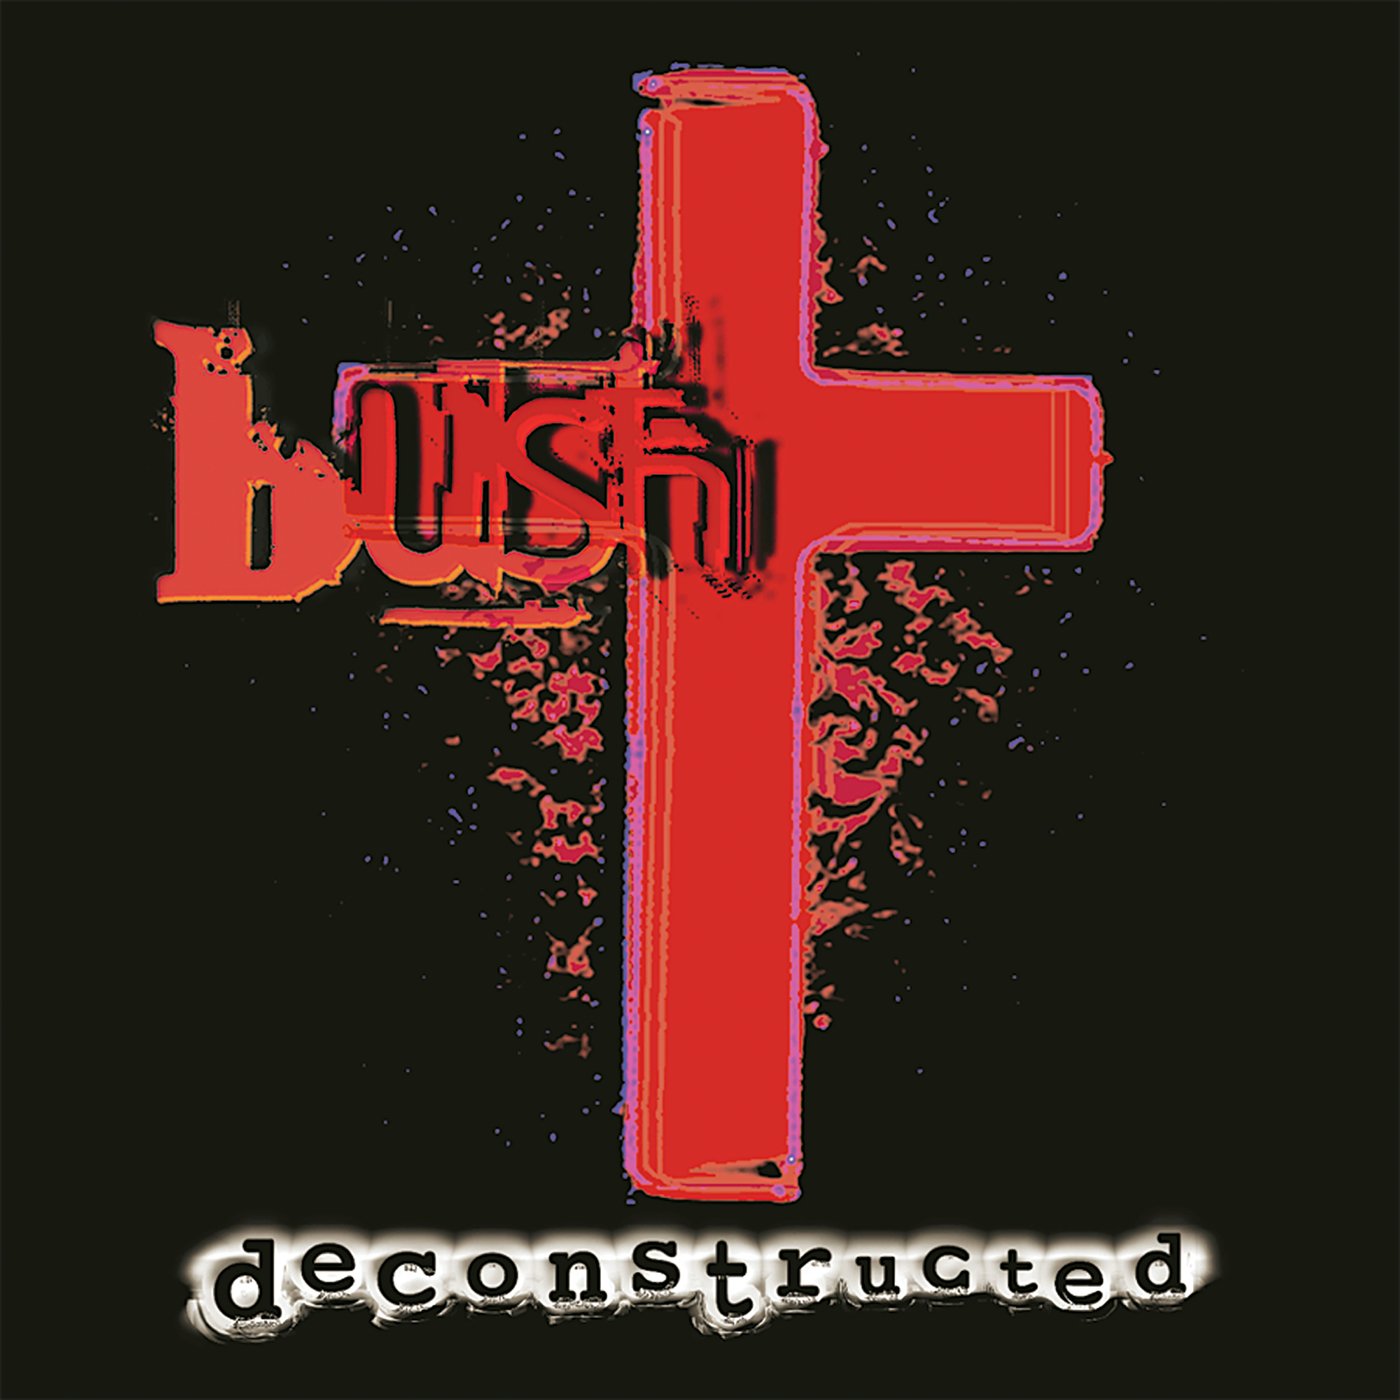 Bush – Deconstructed - CD - 2004 - Kirtland Records – TRM-74021-2